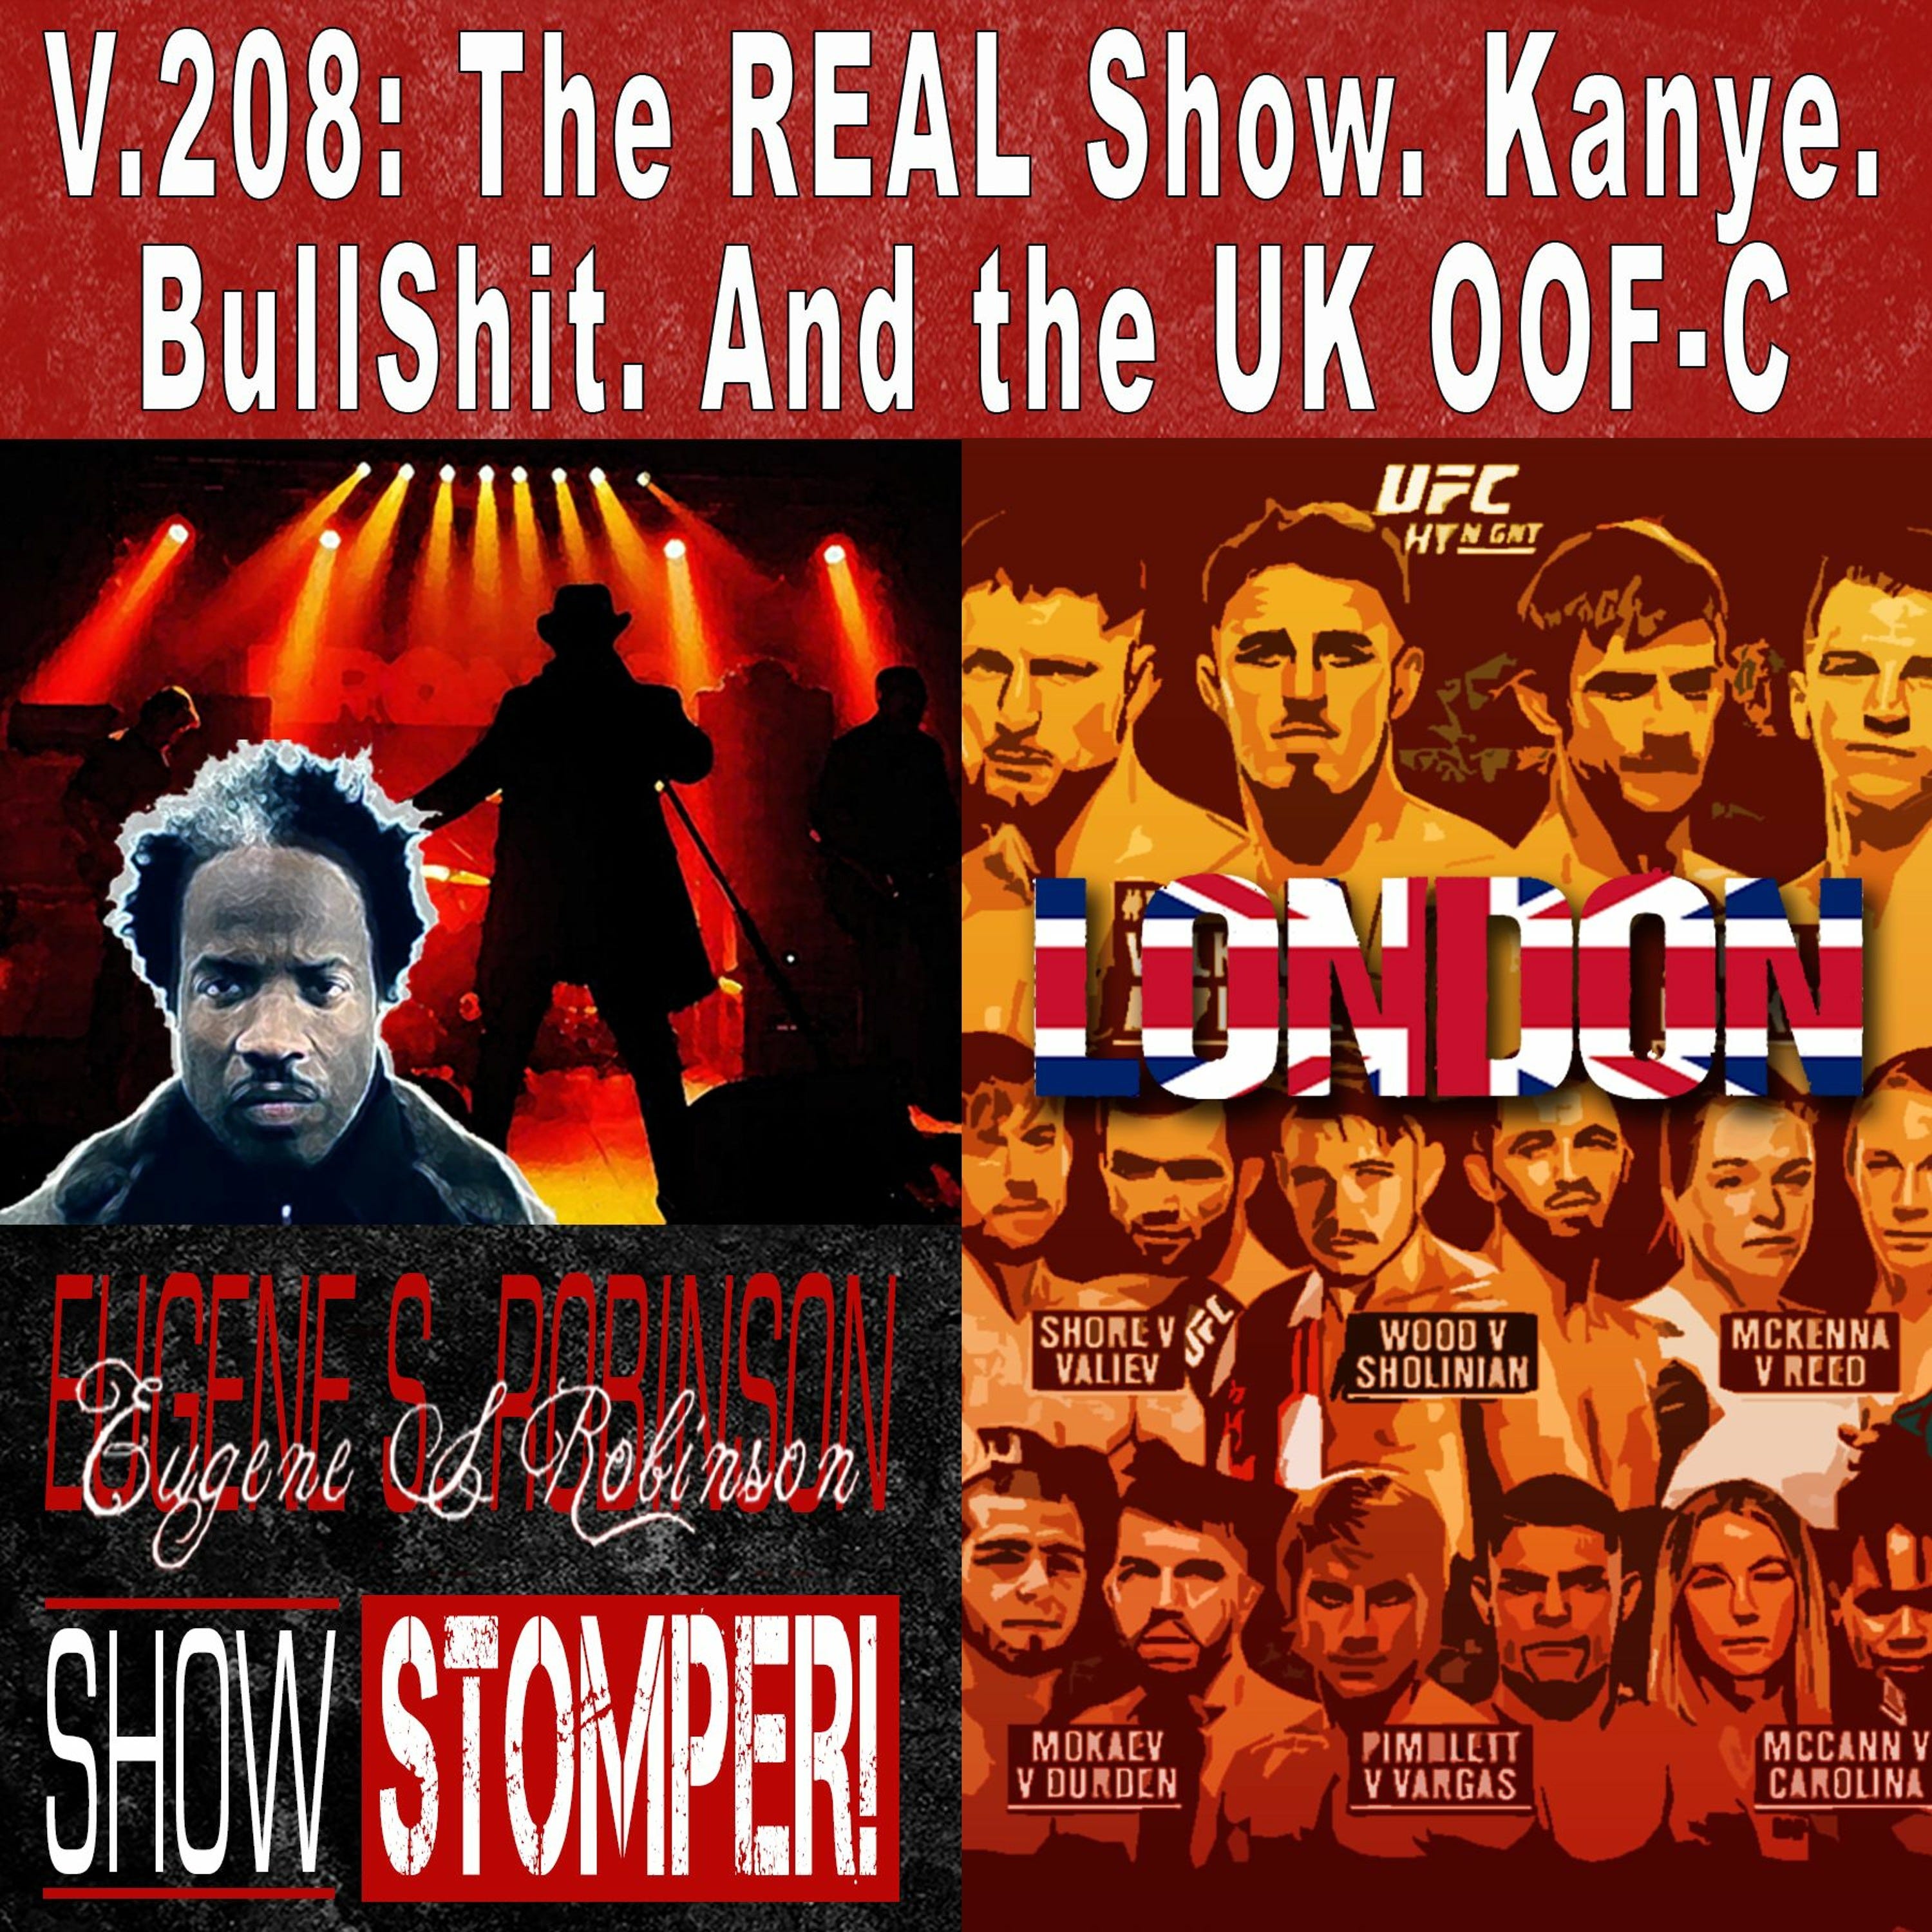 V.208: The REAL Show. Kanye. BullShit. And the UK OOF-C on The Eugene S. Robinson Show Stomper!